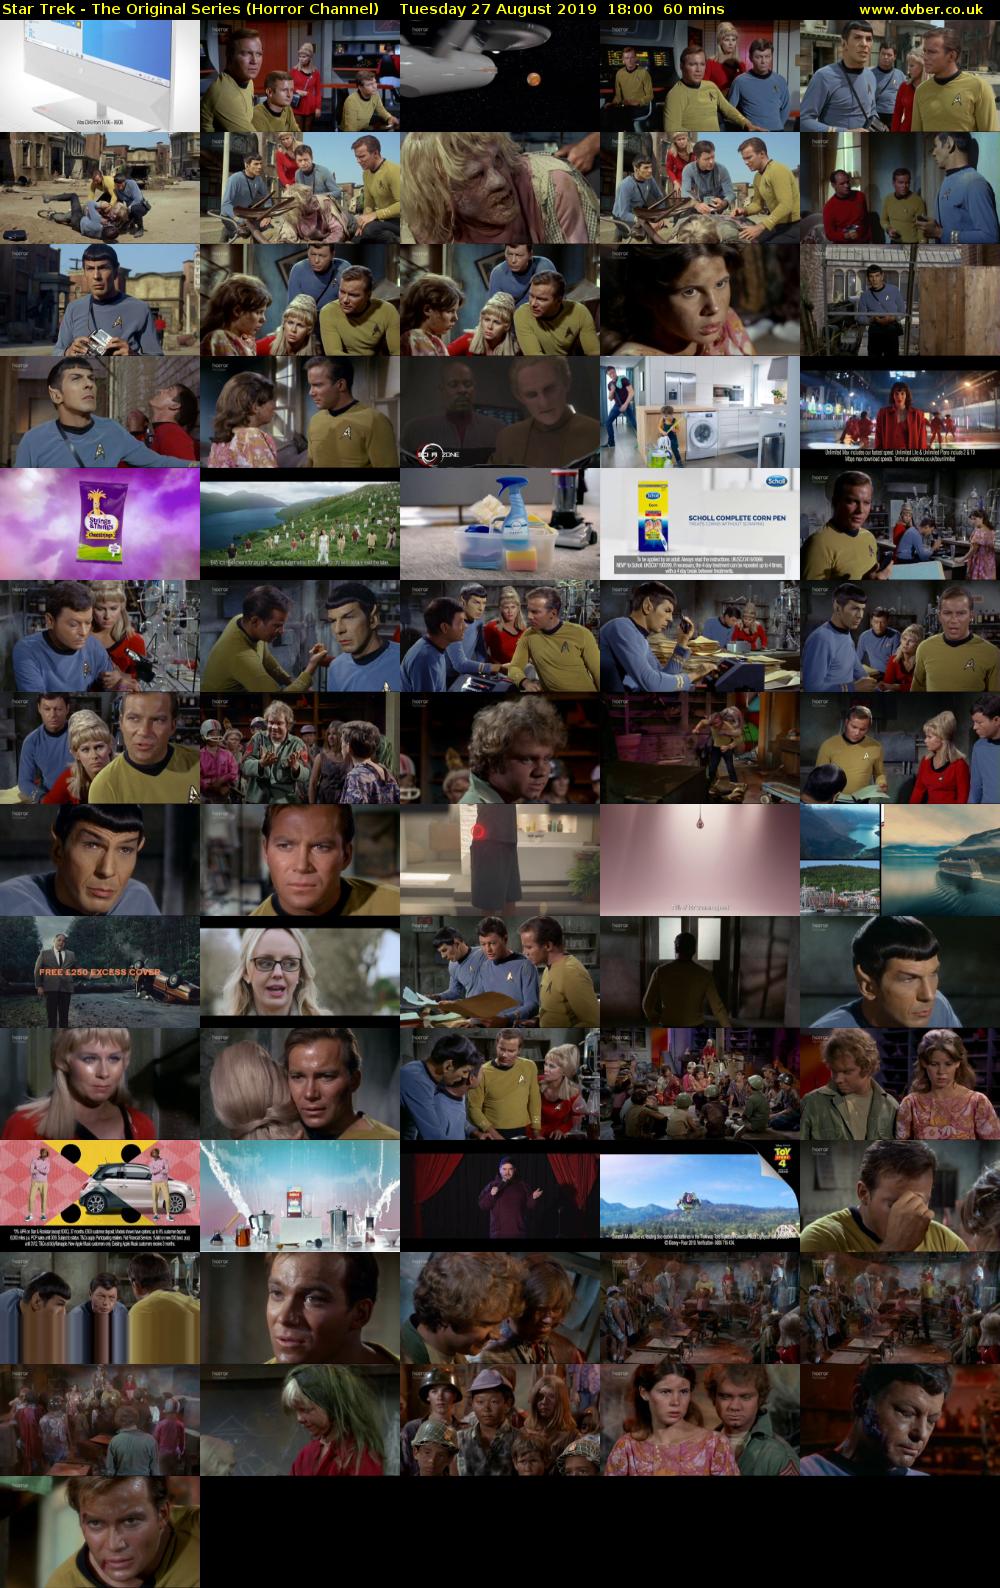 Star Trek - The Original Series (Horror Channel) Tuesday 27 August 2019 18:00 - 19:00